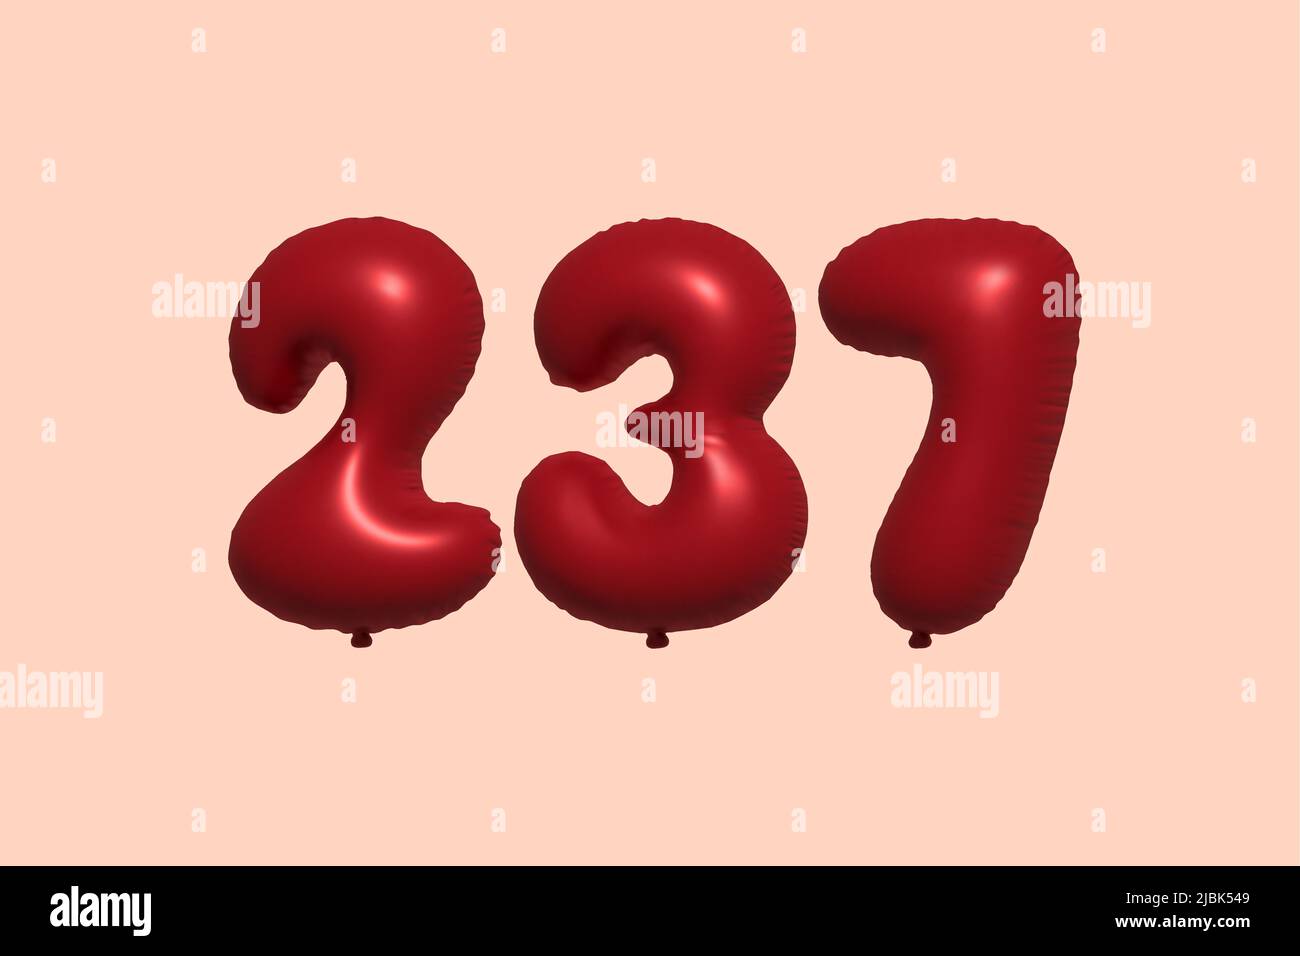 237 Today's Deals Images, Stock Photos, 3D objects, & Vectors